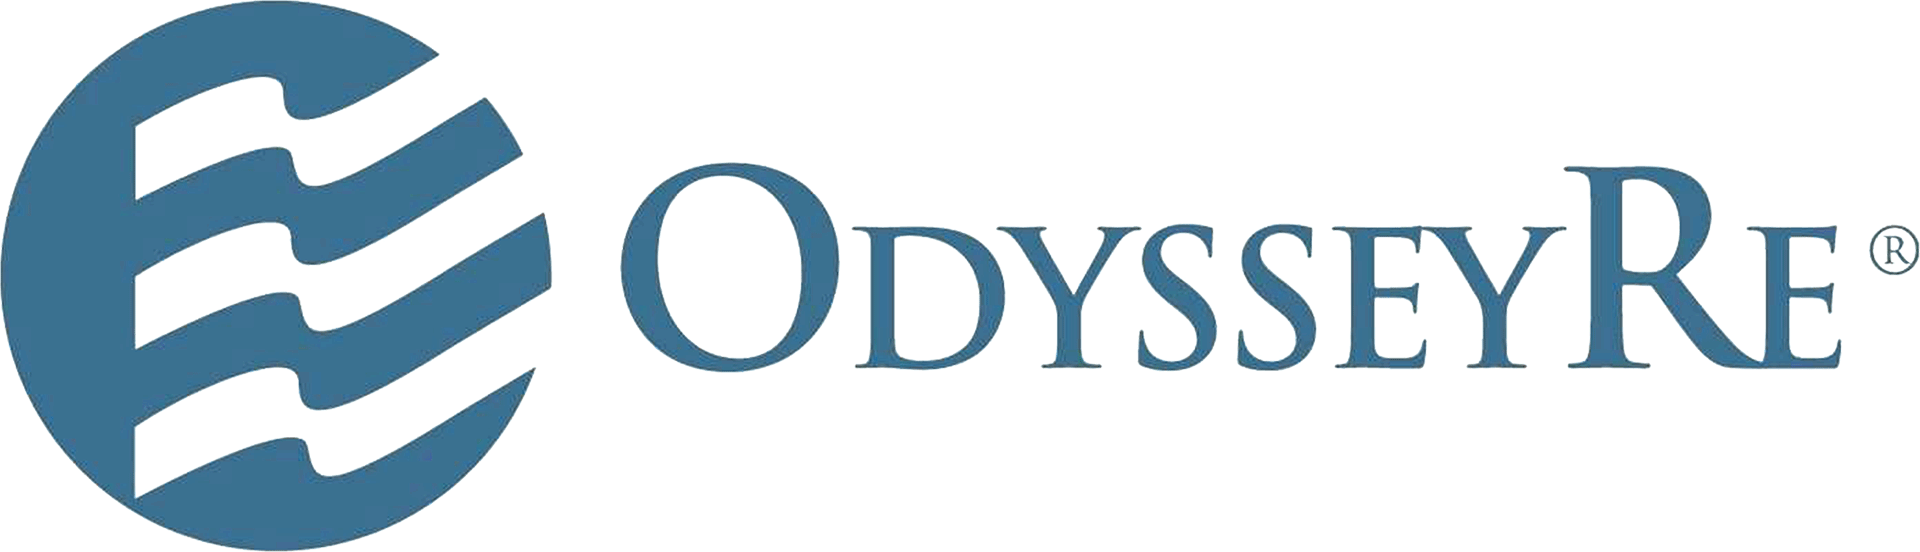 odyssey-re-logo